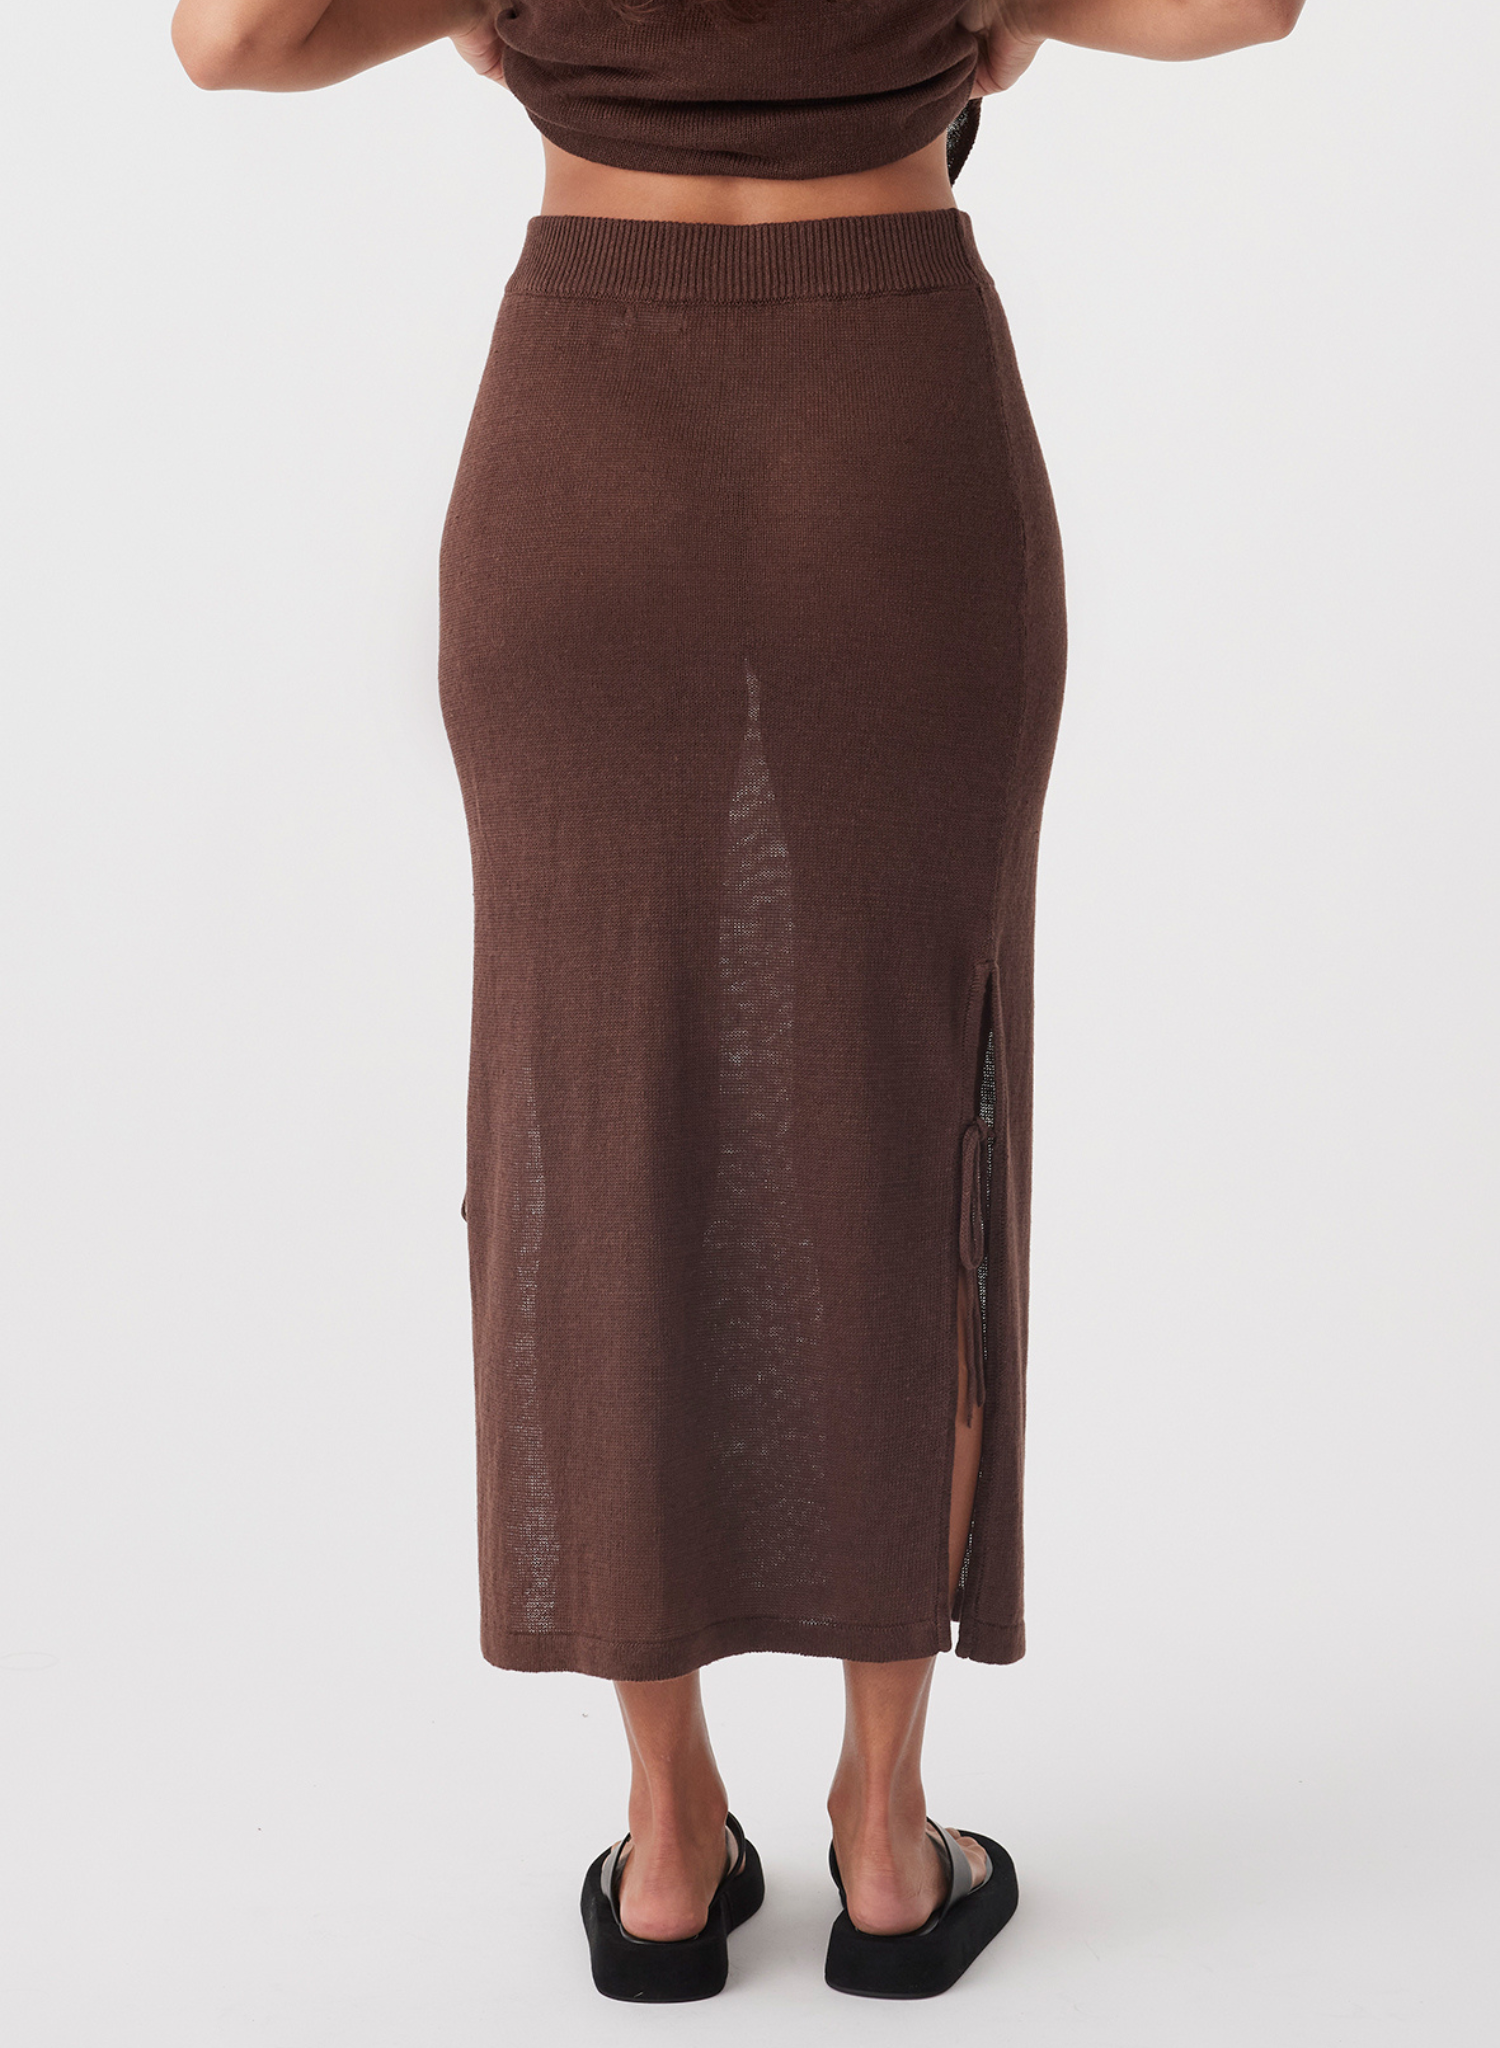 Pearla Skirt in Chocolate